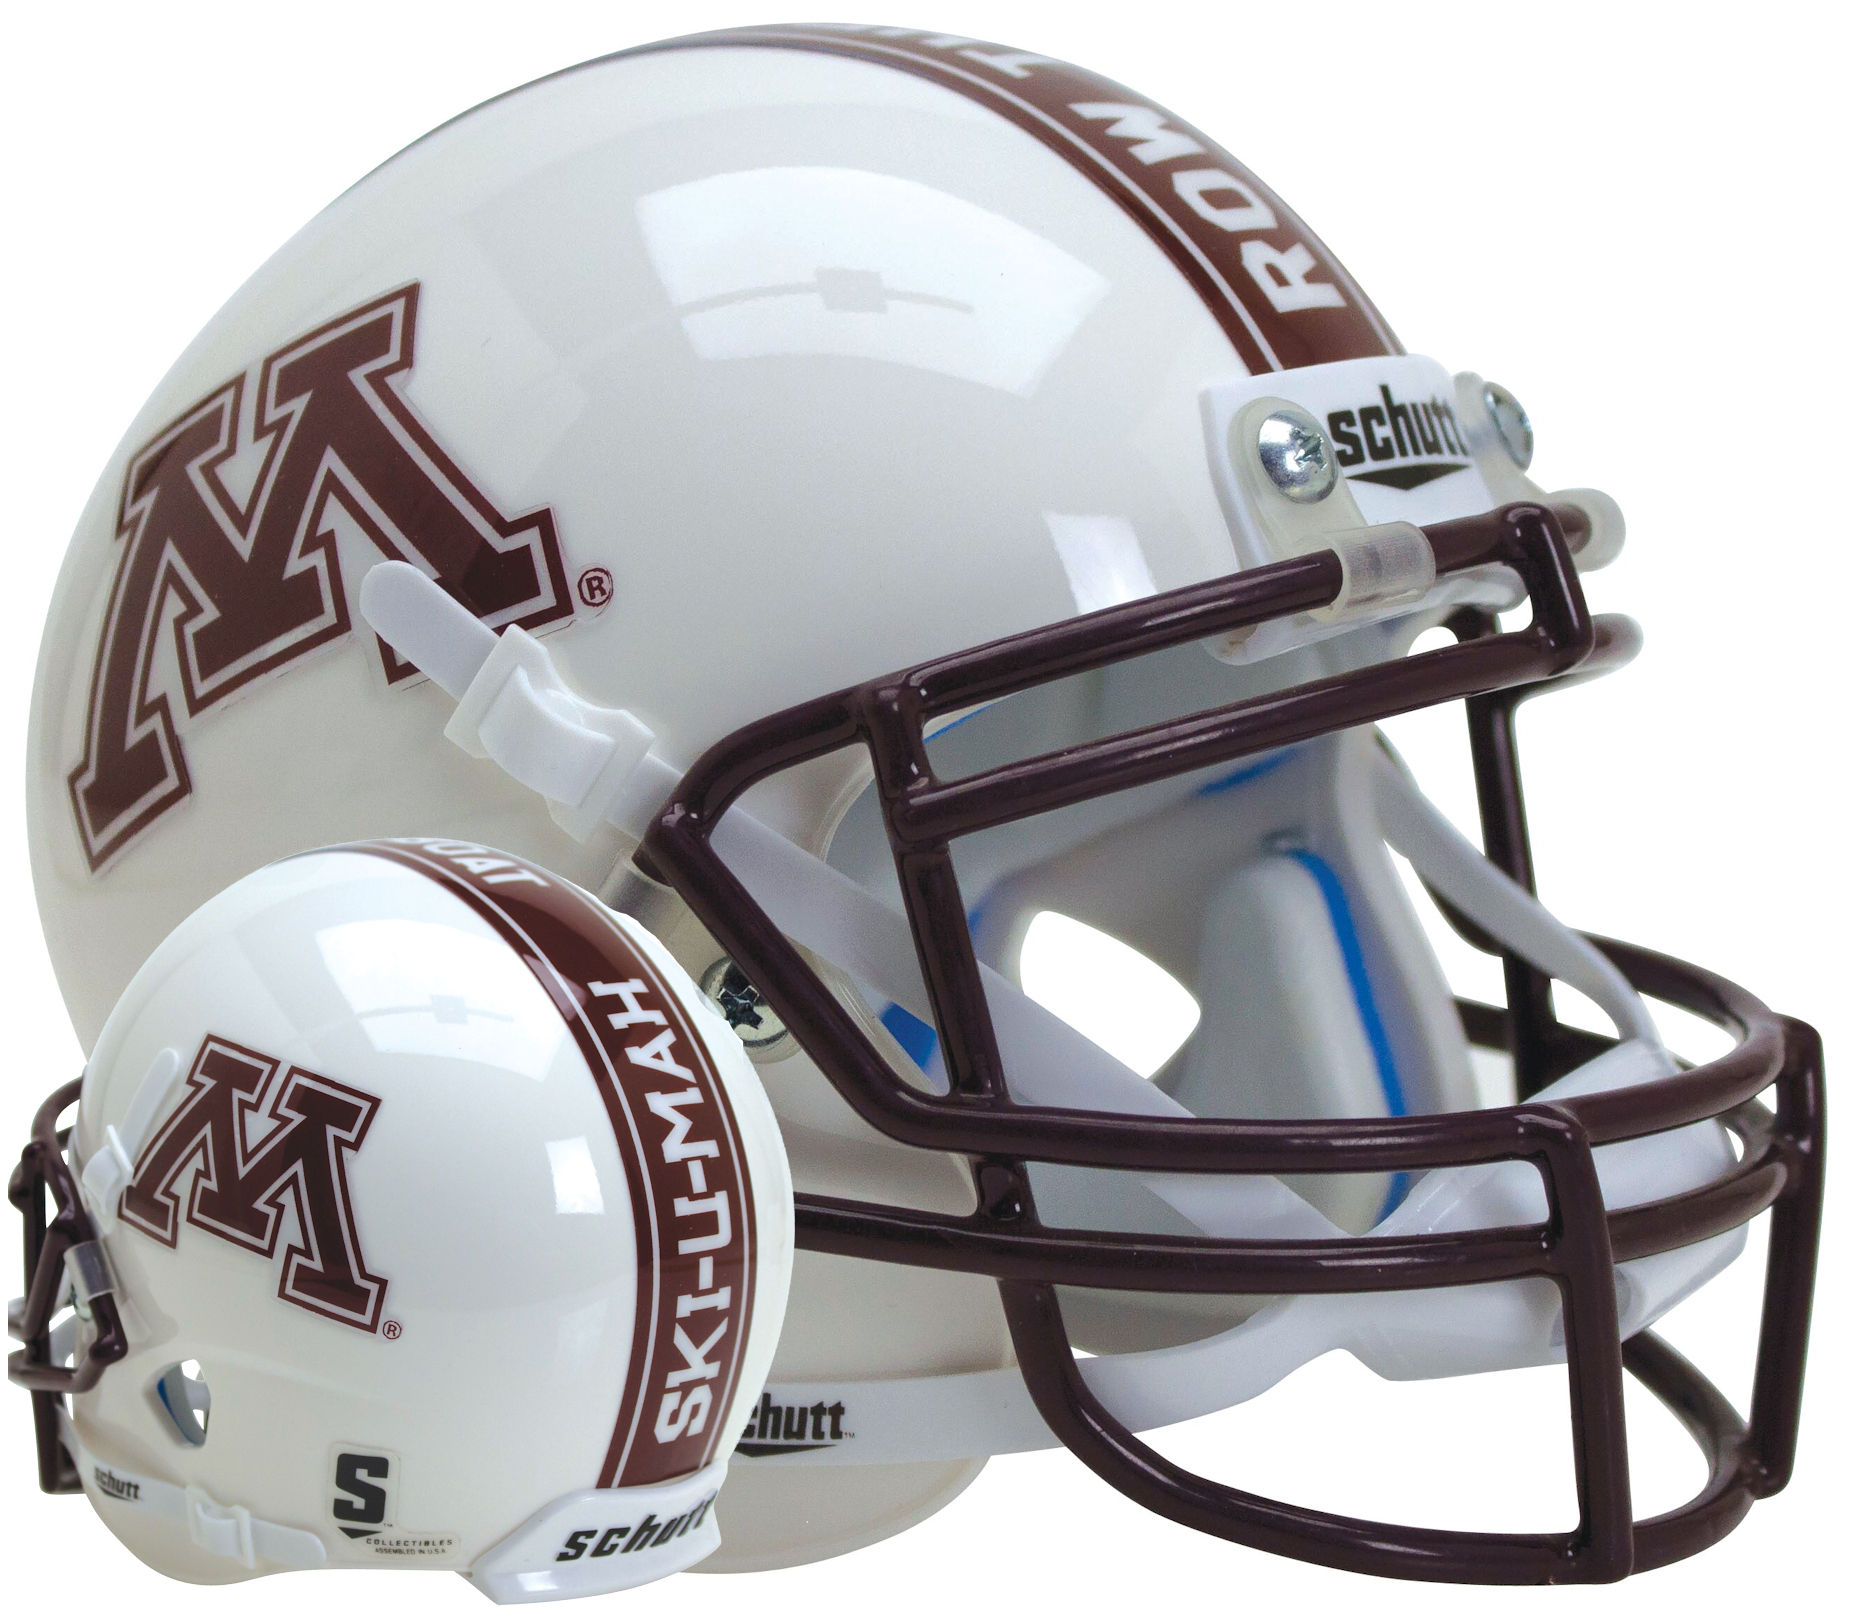 Minnesota Golden Gophers Authentic College XP Football Helmet Schutt <B>White Pinstripe</B>